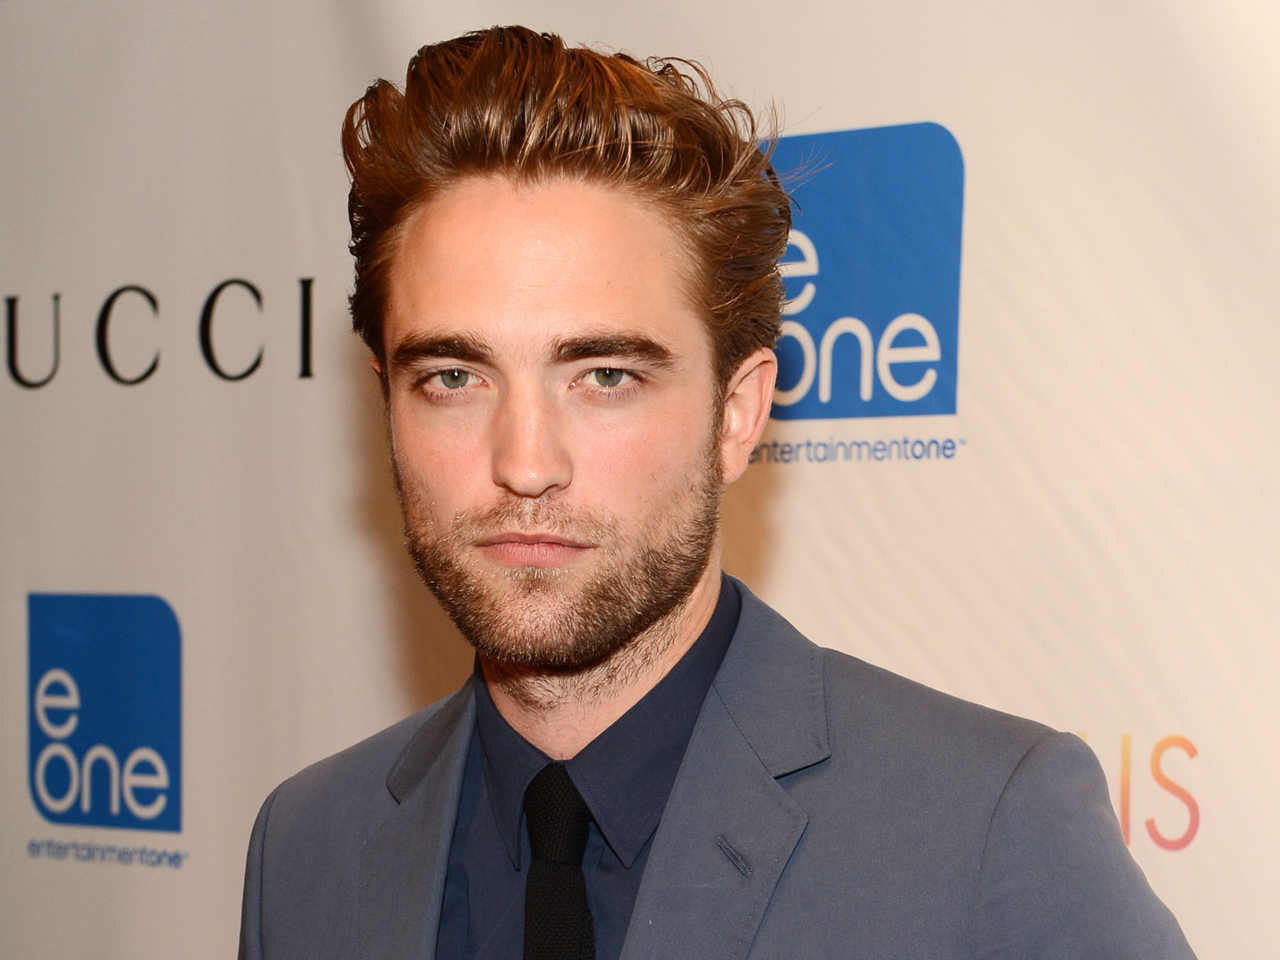 Robert Pattinson to appear at MTV Video Music Awards - CBS News1280 x 960